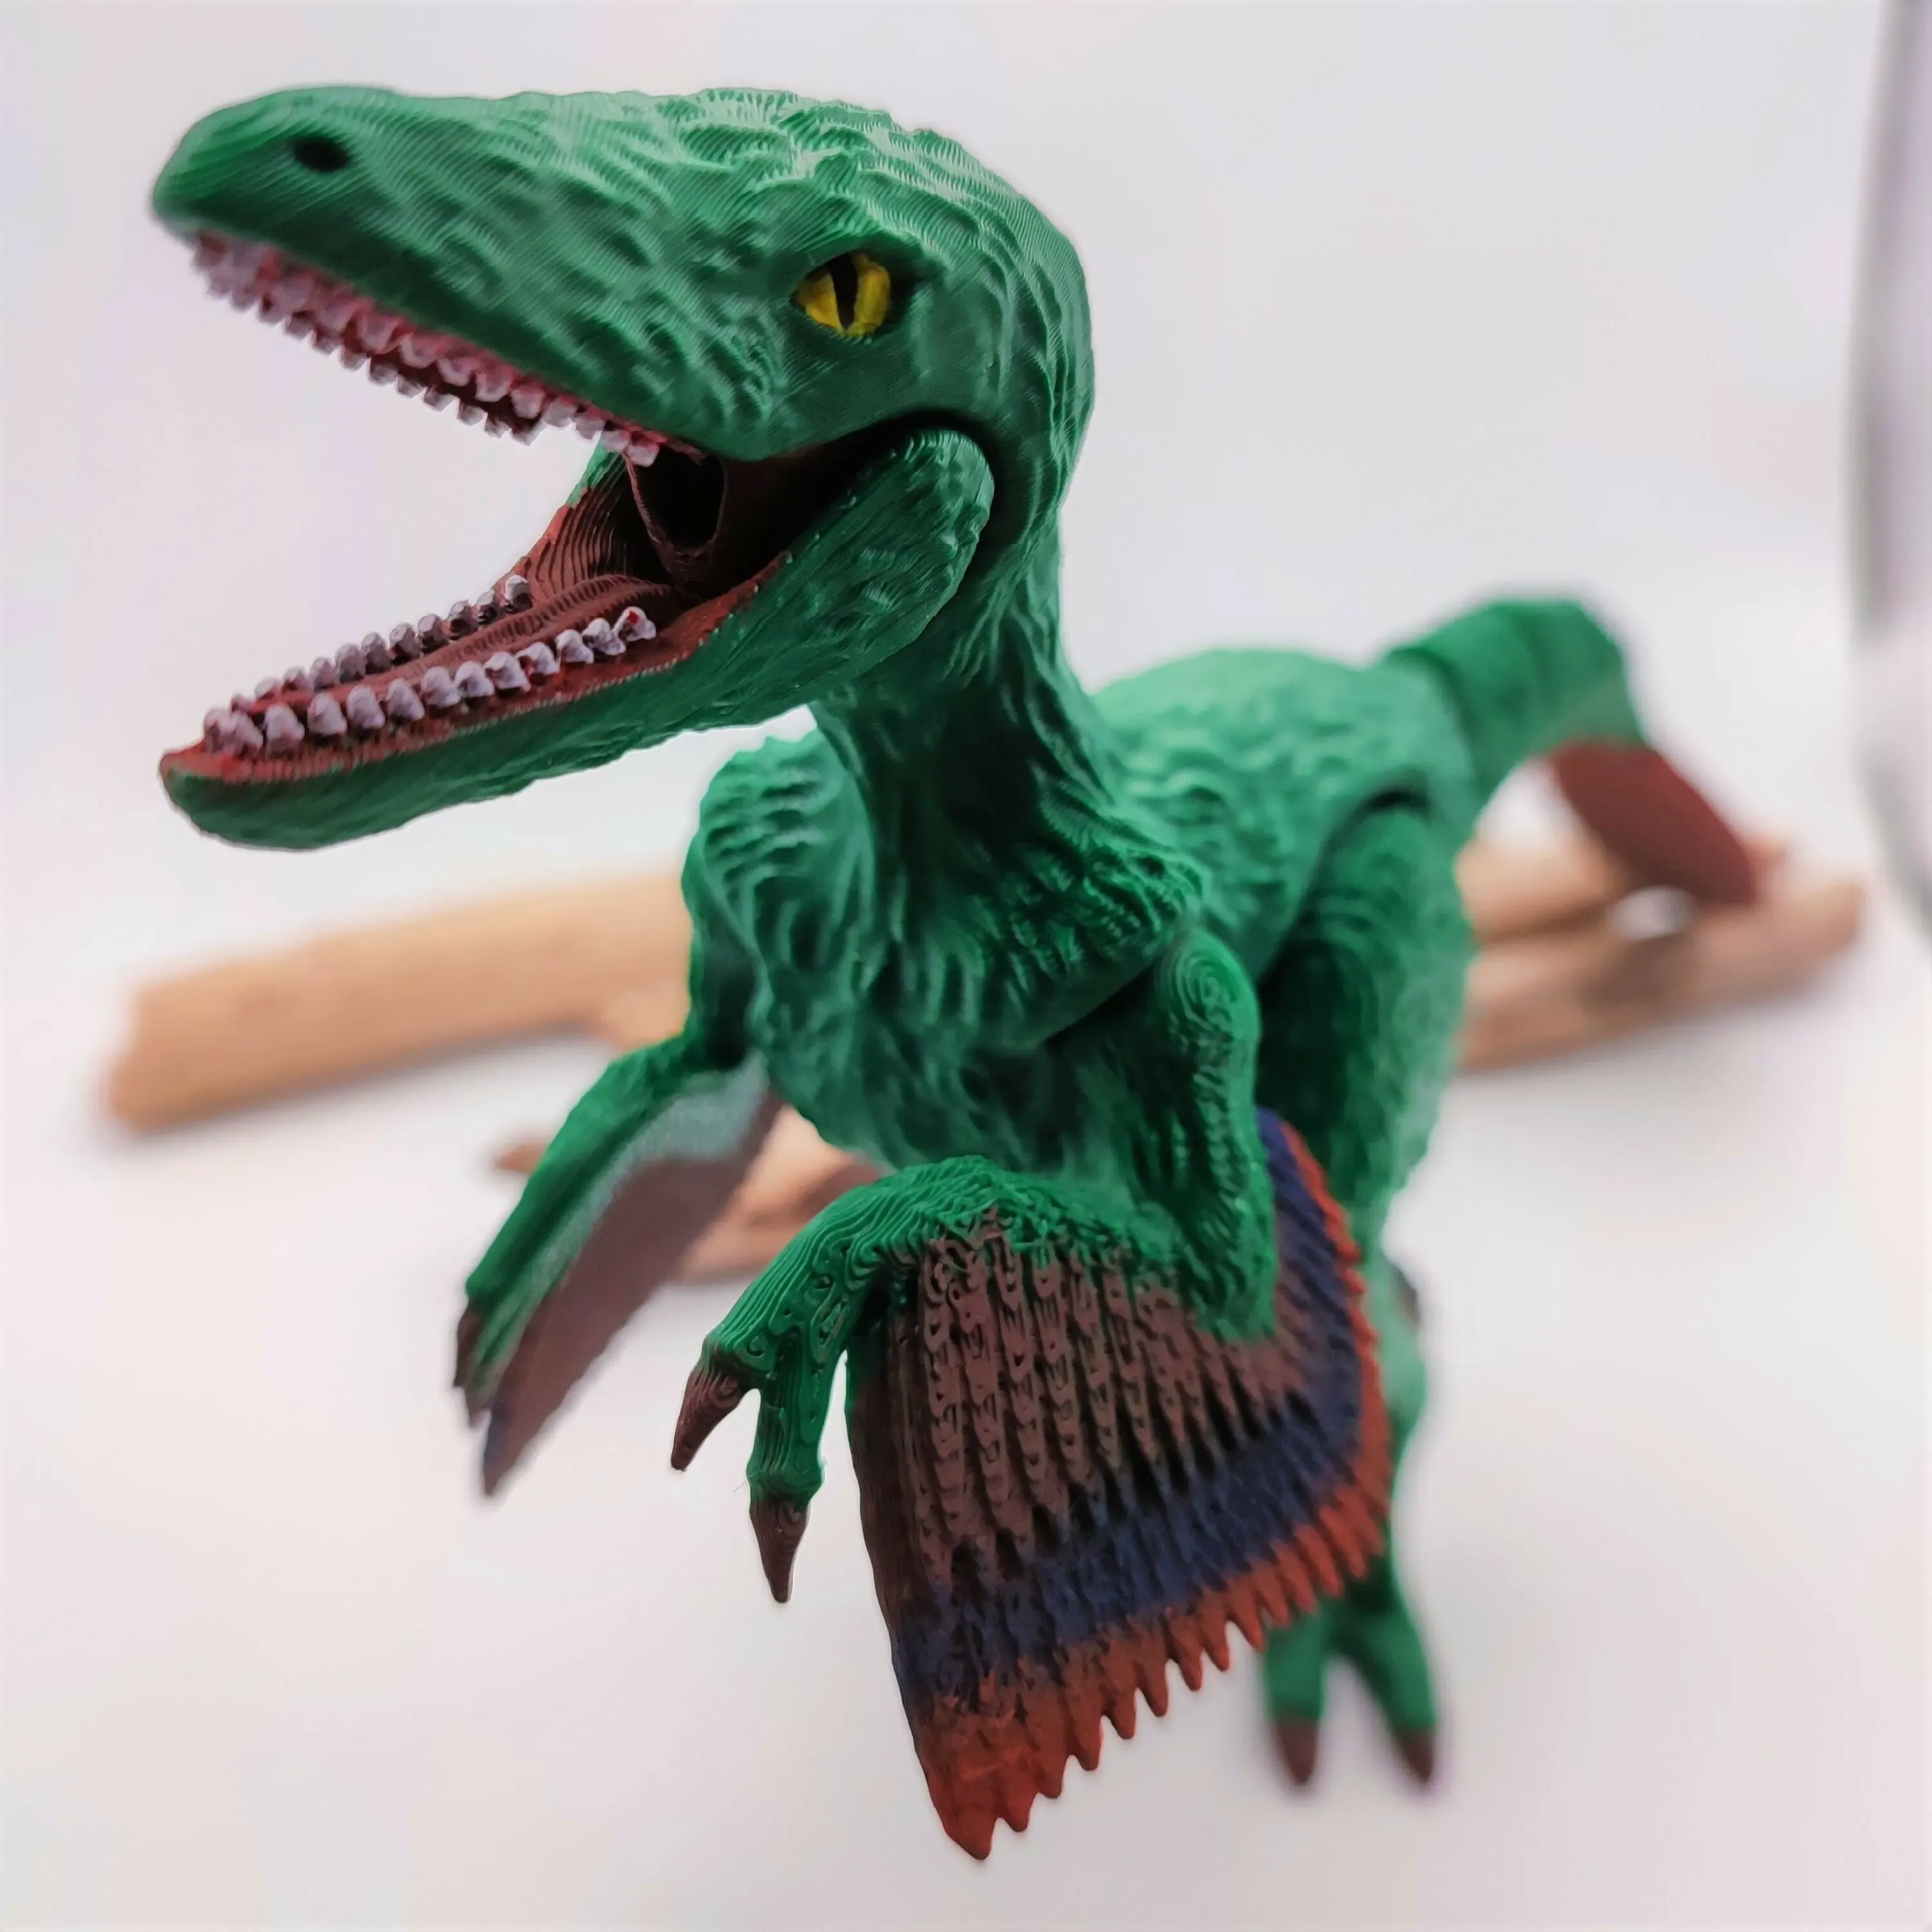 Velociraptor Flexi